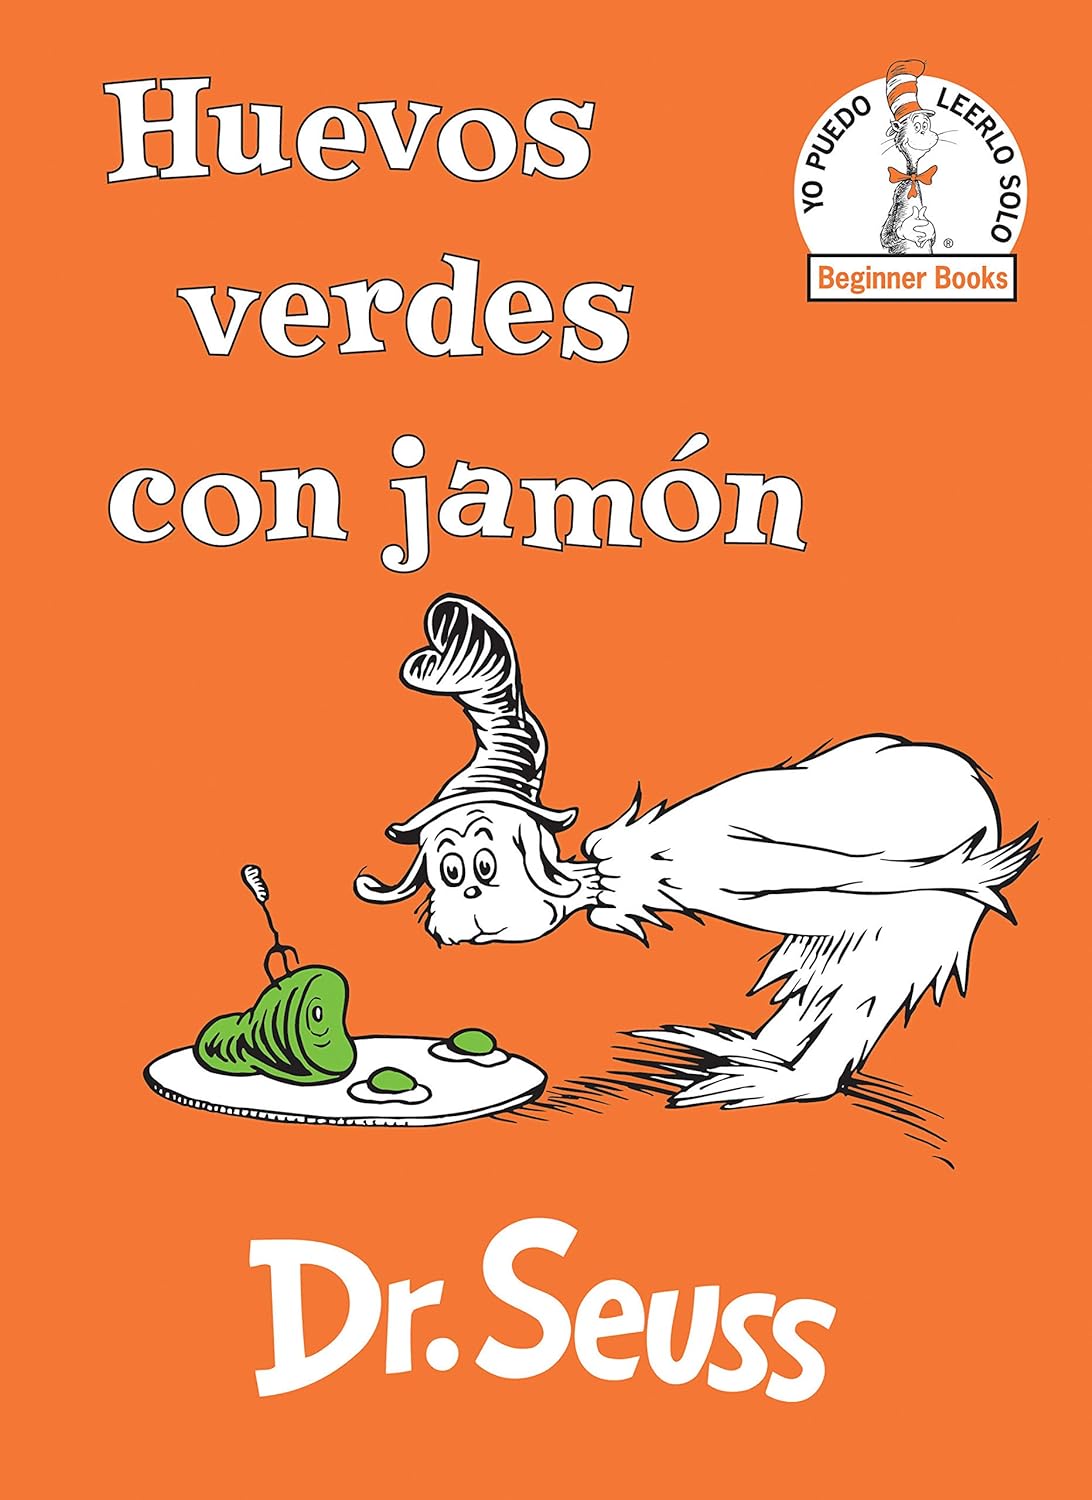 Huevos verdes con jamon (Green Eggs and Ham Spanish Edition)